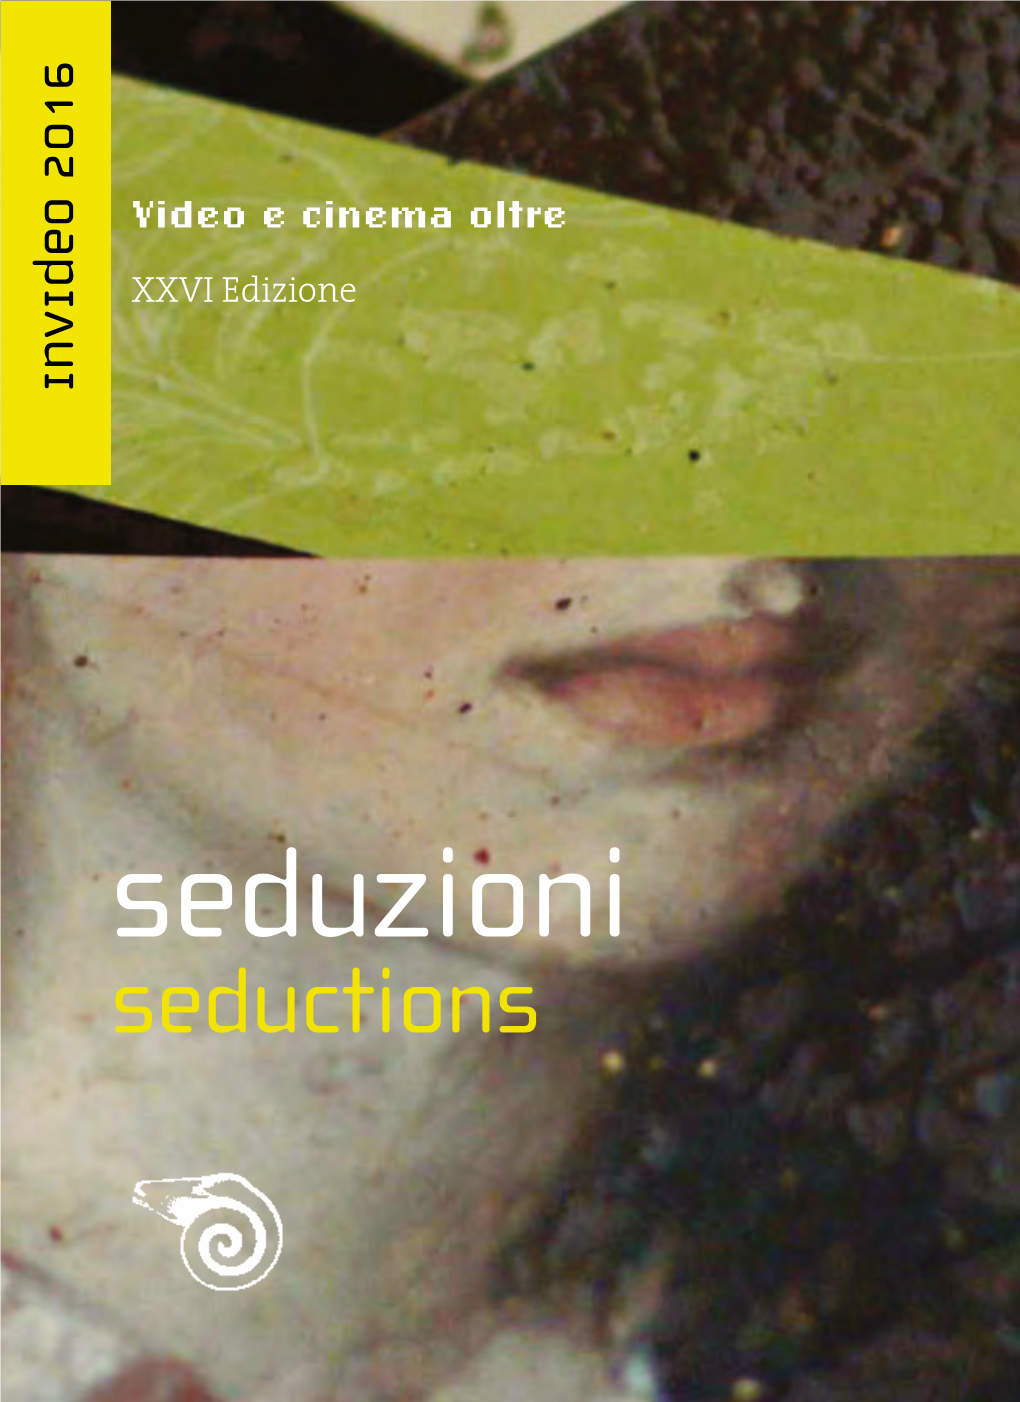 Seduzioni Seductions Invideo 2016 Video E Cinema Oltre Exhibition of Video and Cinema Beyond Seduzioni Seductions